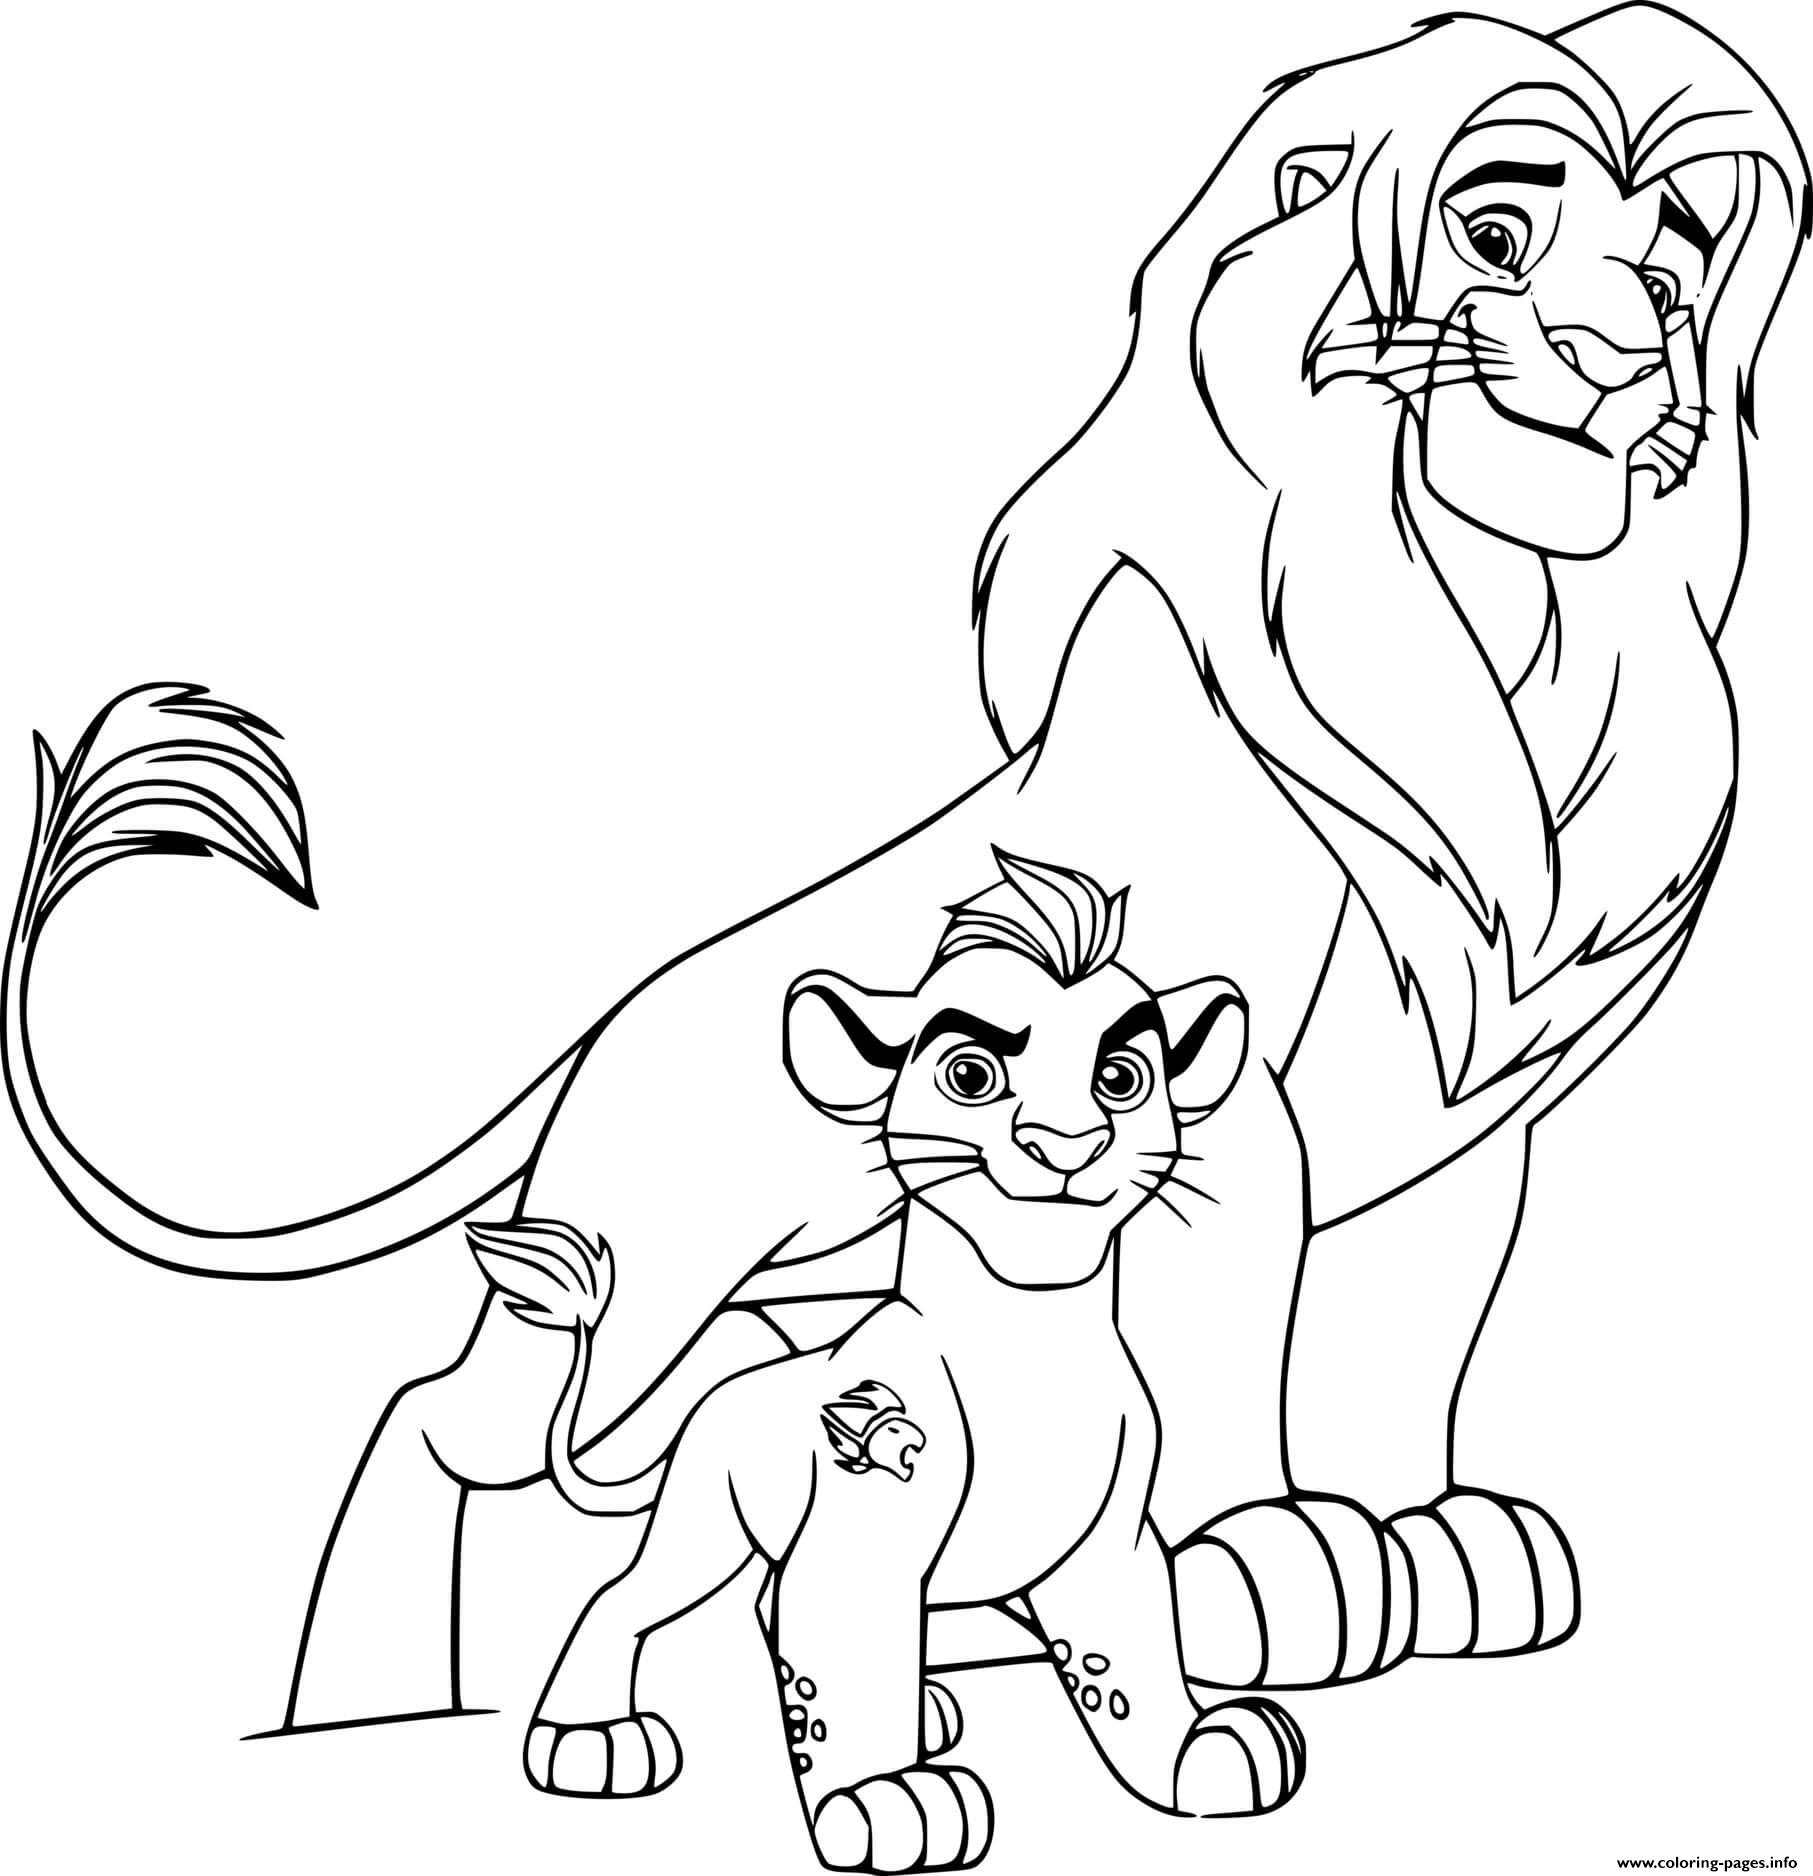 Simba And Kion coloring